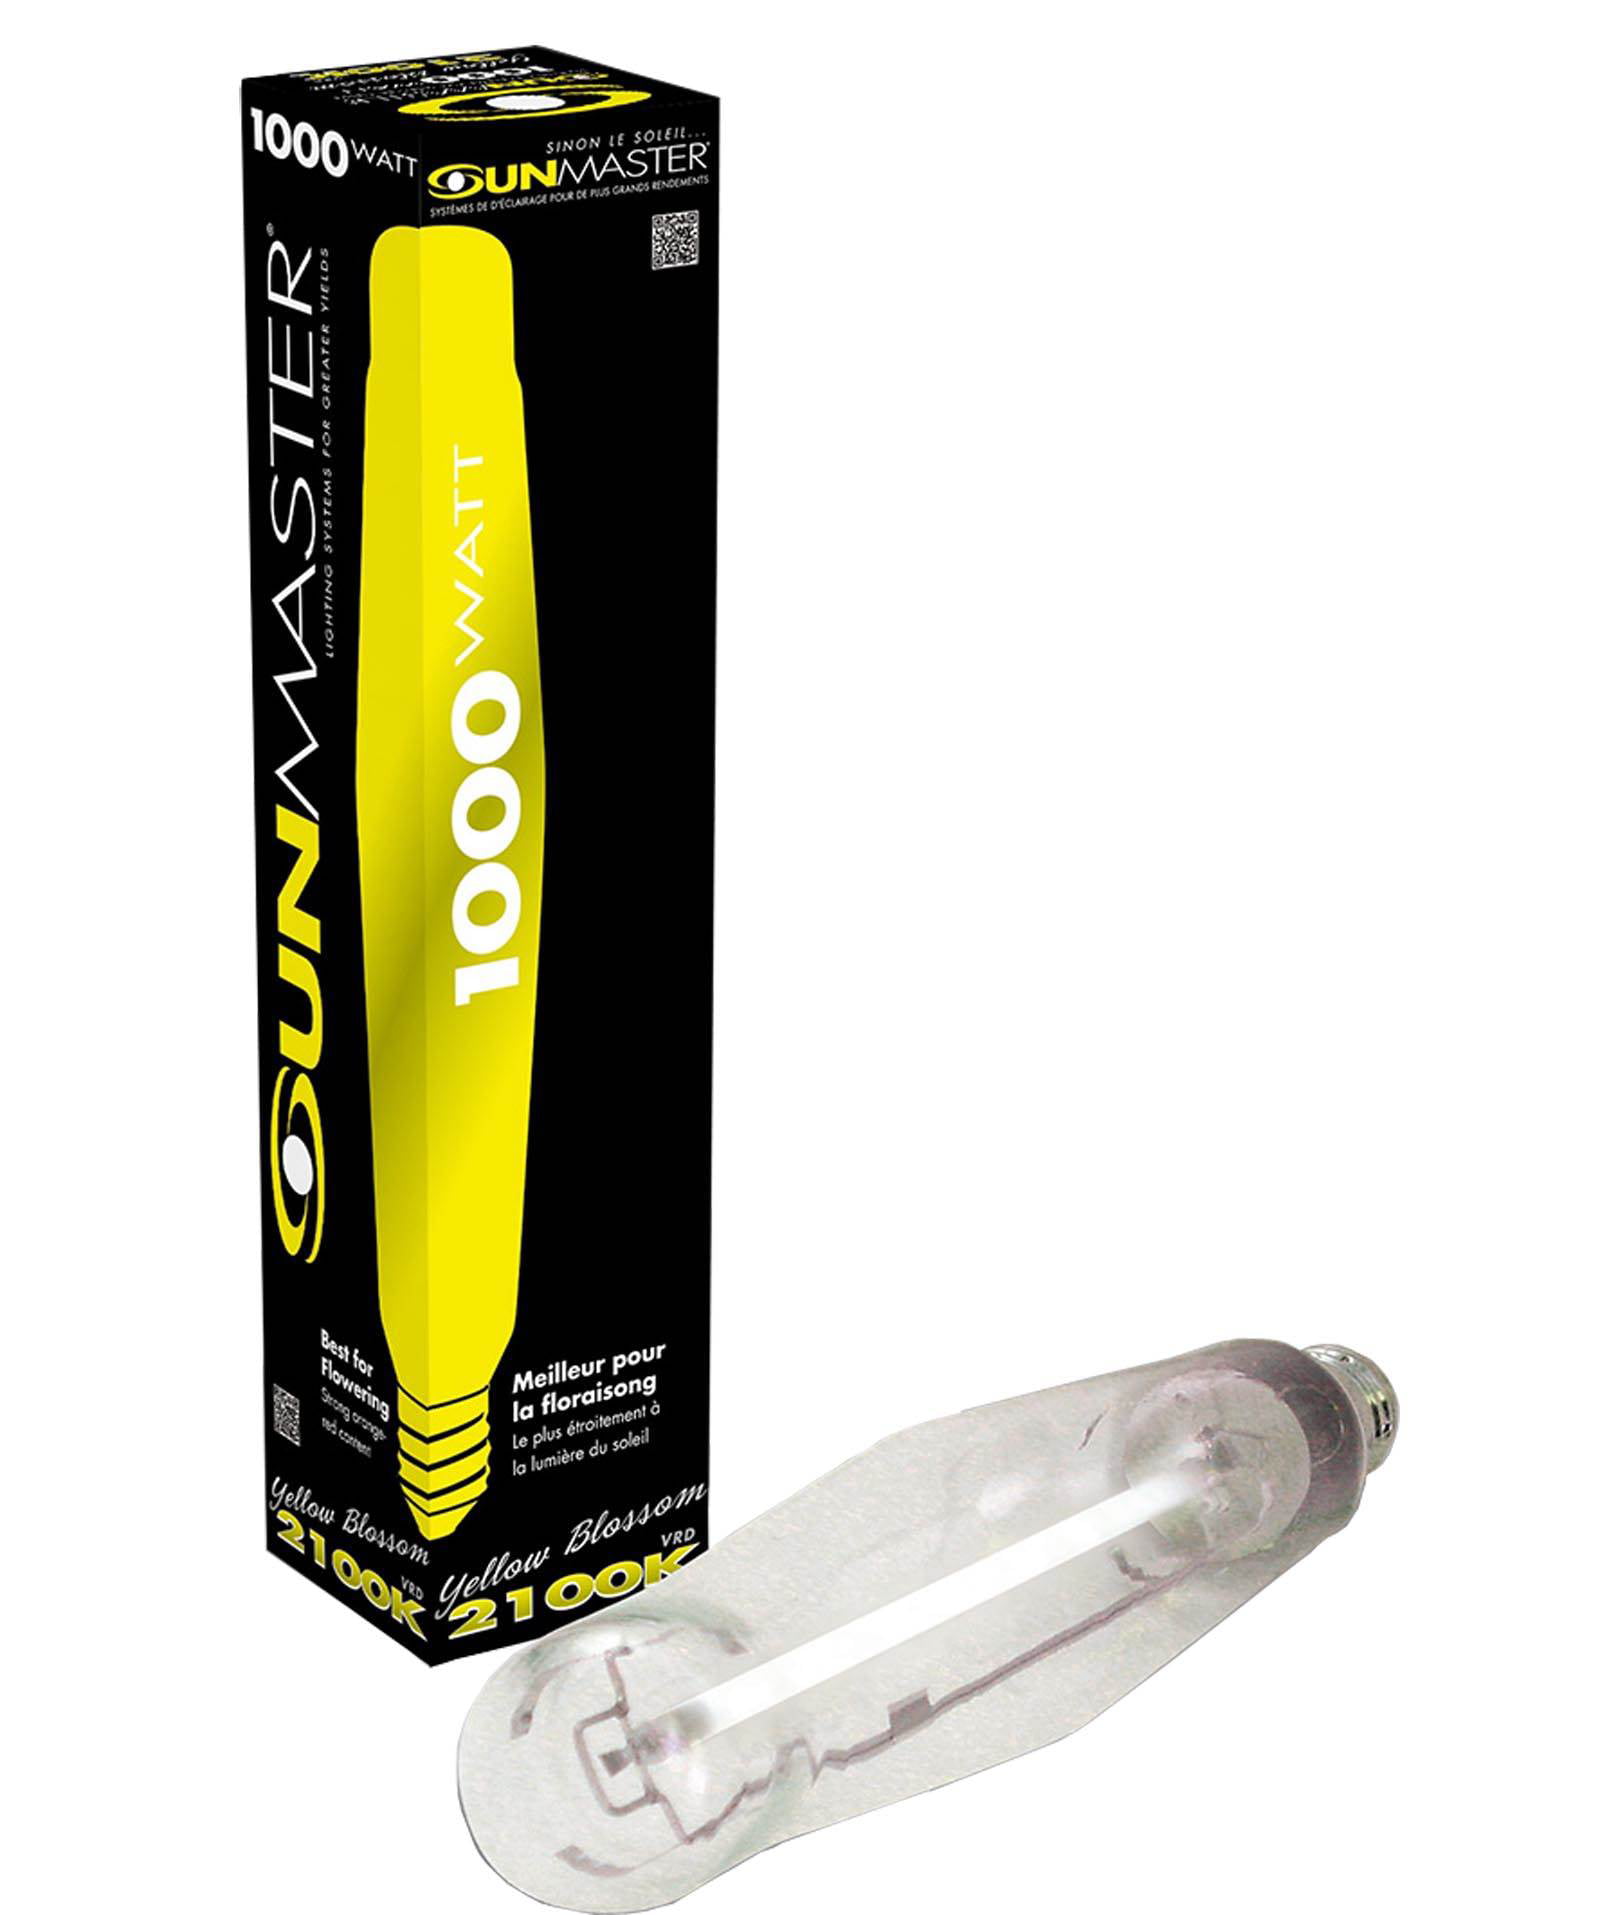 Sunmaster 1000W Watt Hps Dual Spectrum Grow Light Bulb Lamp Hydroponics /WoW! 